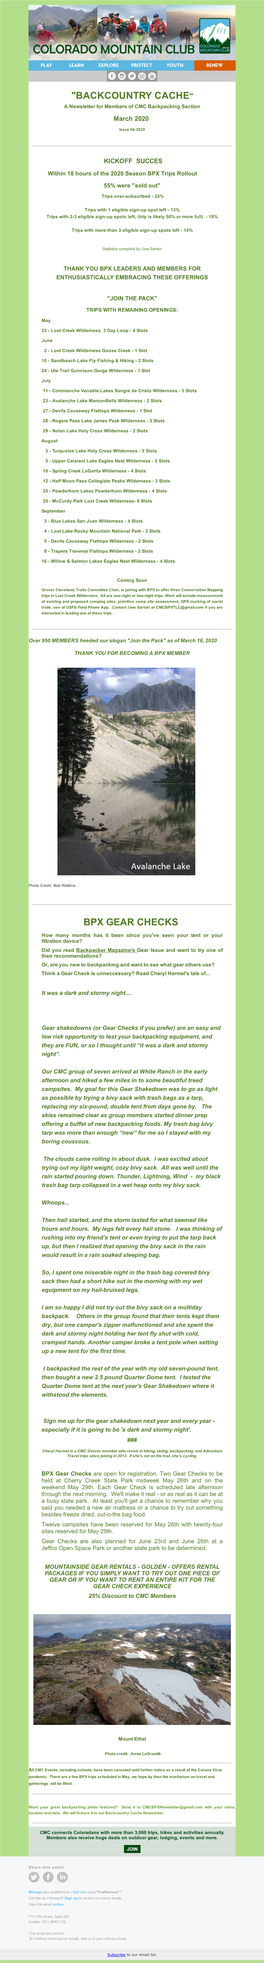 "Backcountry Cache" Bpx Gear Checks